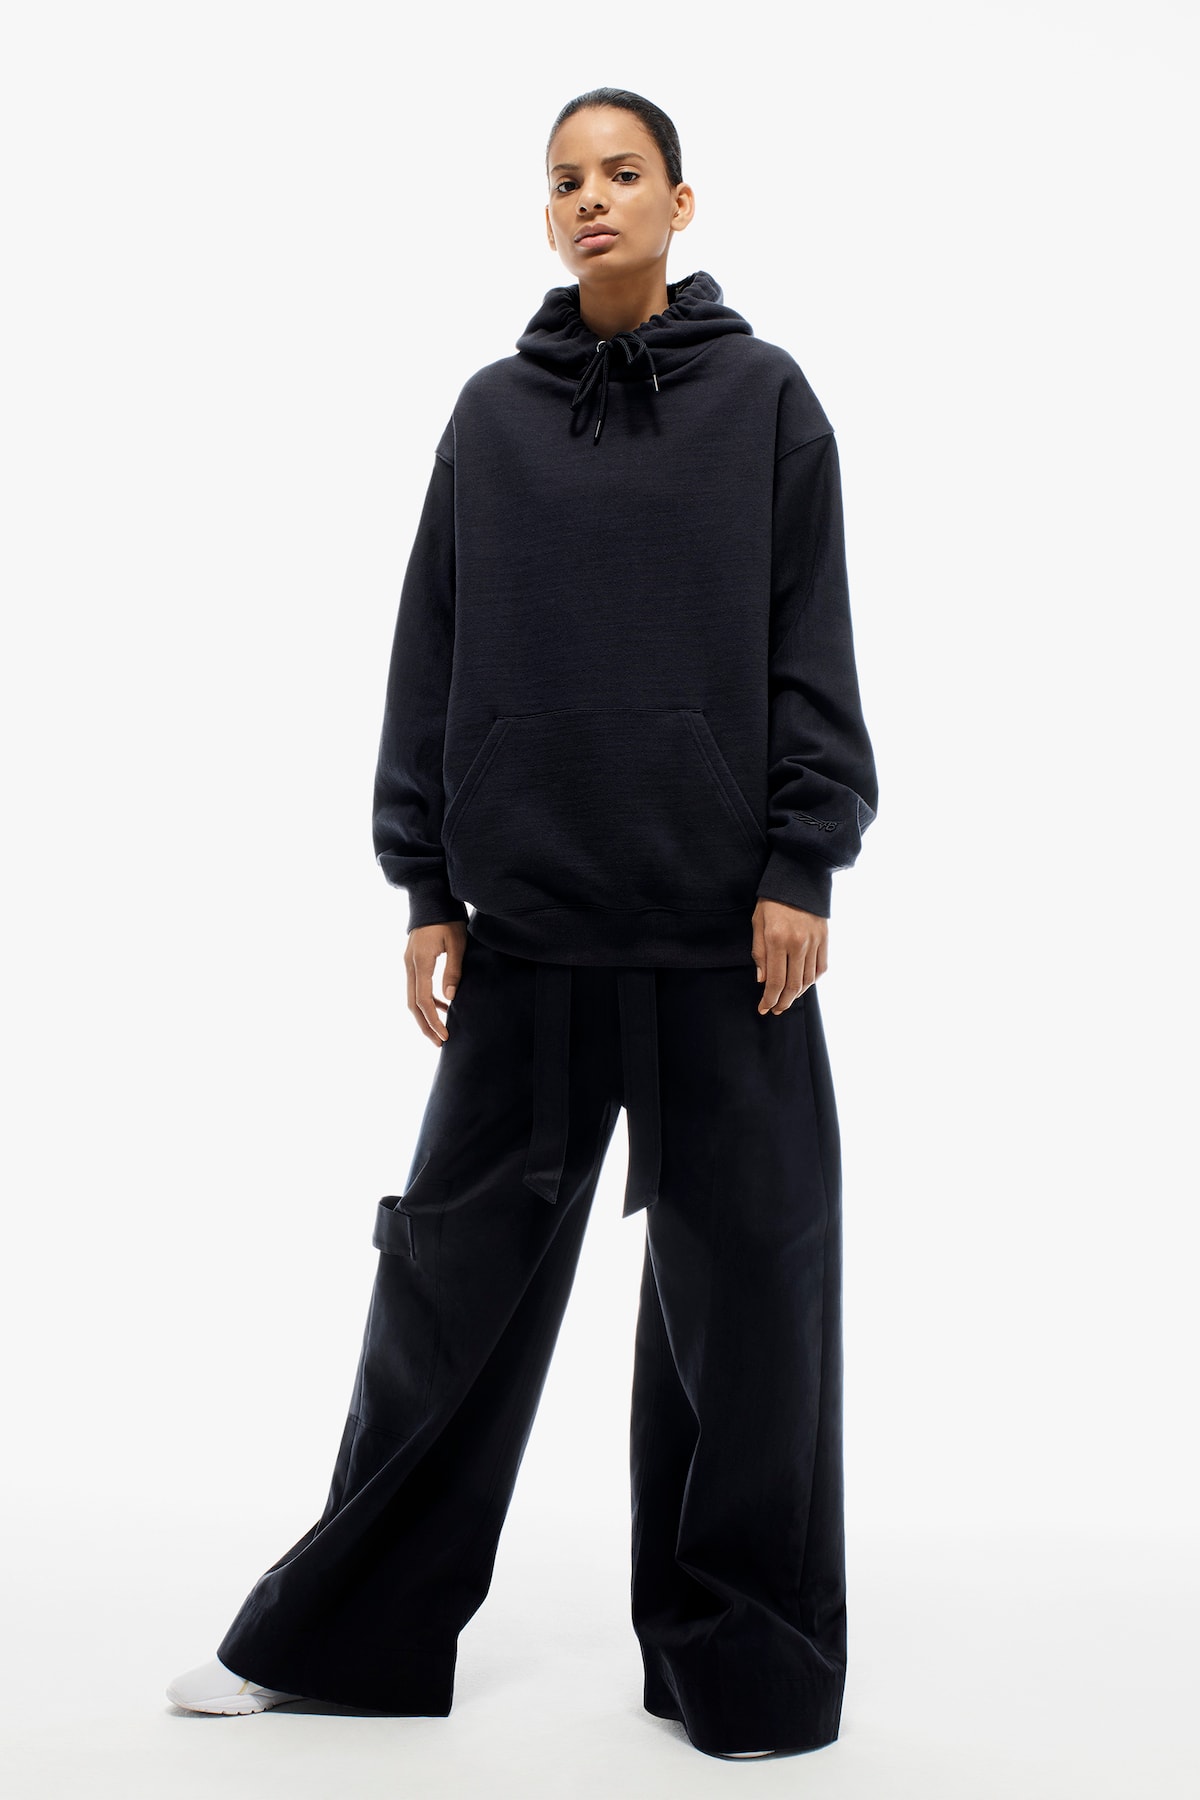 Victoria Beckham x Reebok Collection Drop 2 FW19 Sneaker Lookbook Workout Range Design Inspiration Sportswear 